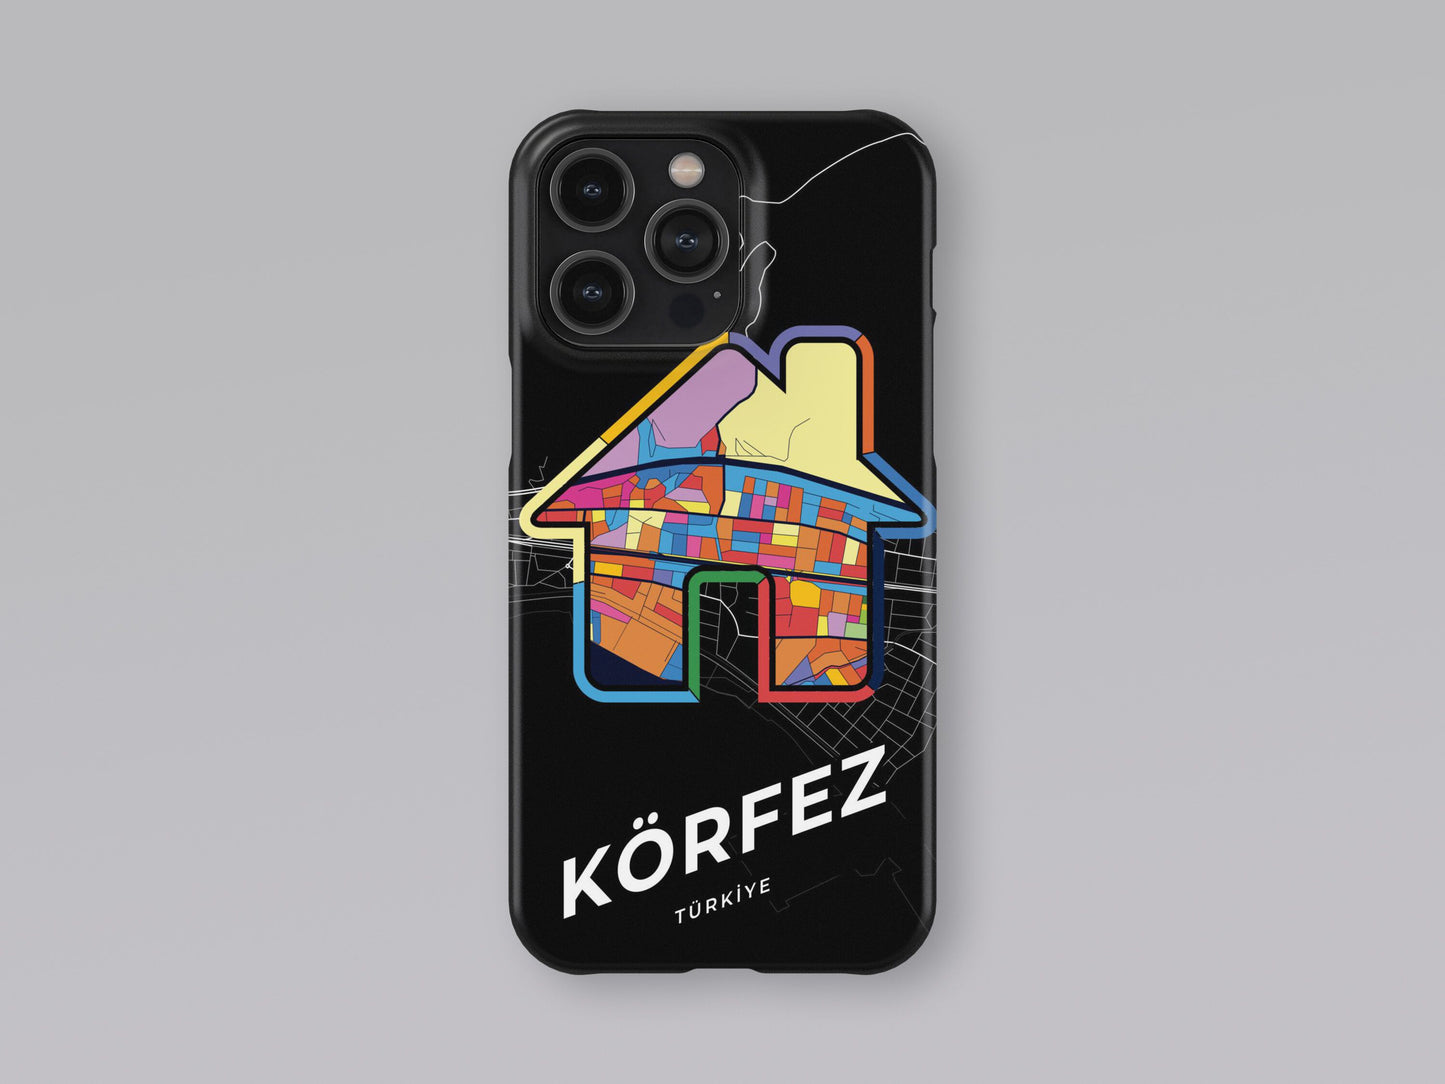 Körfez Turkey slim phone case with colorful icon. Birthday, wedding or housewarming gift. Couple match cases. 3